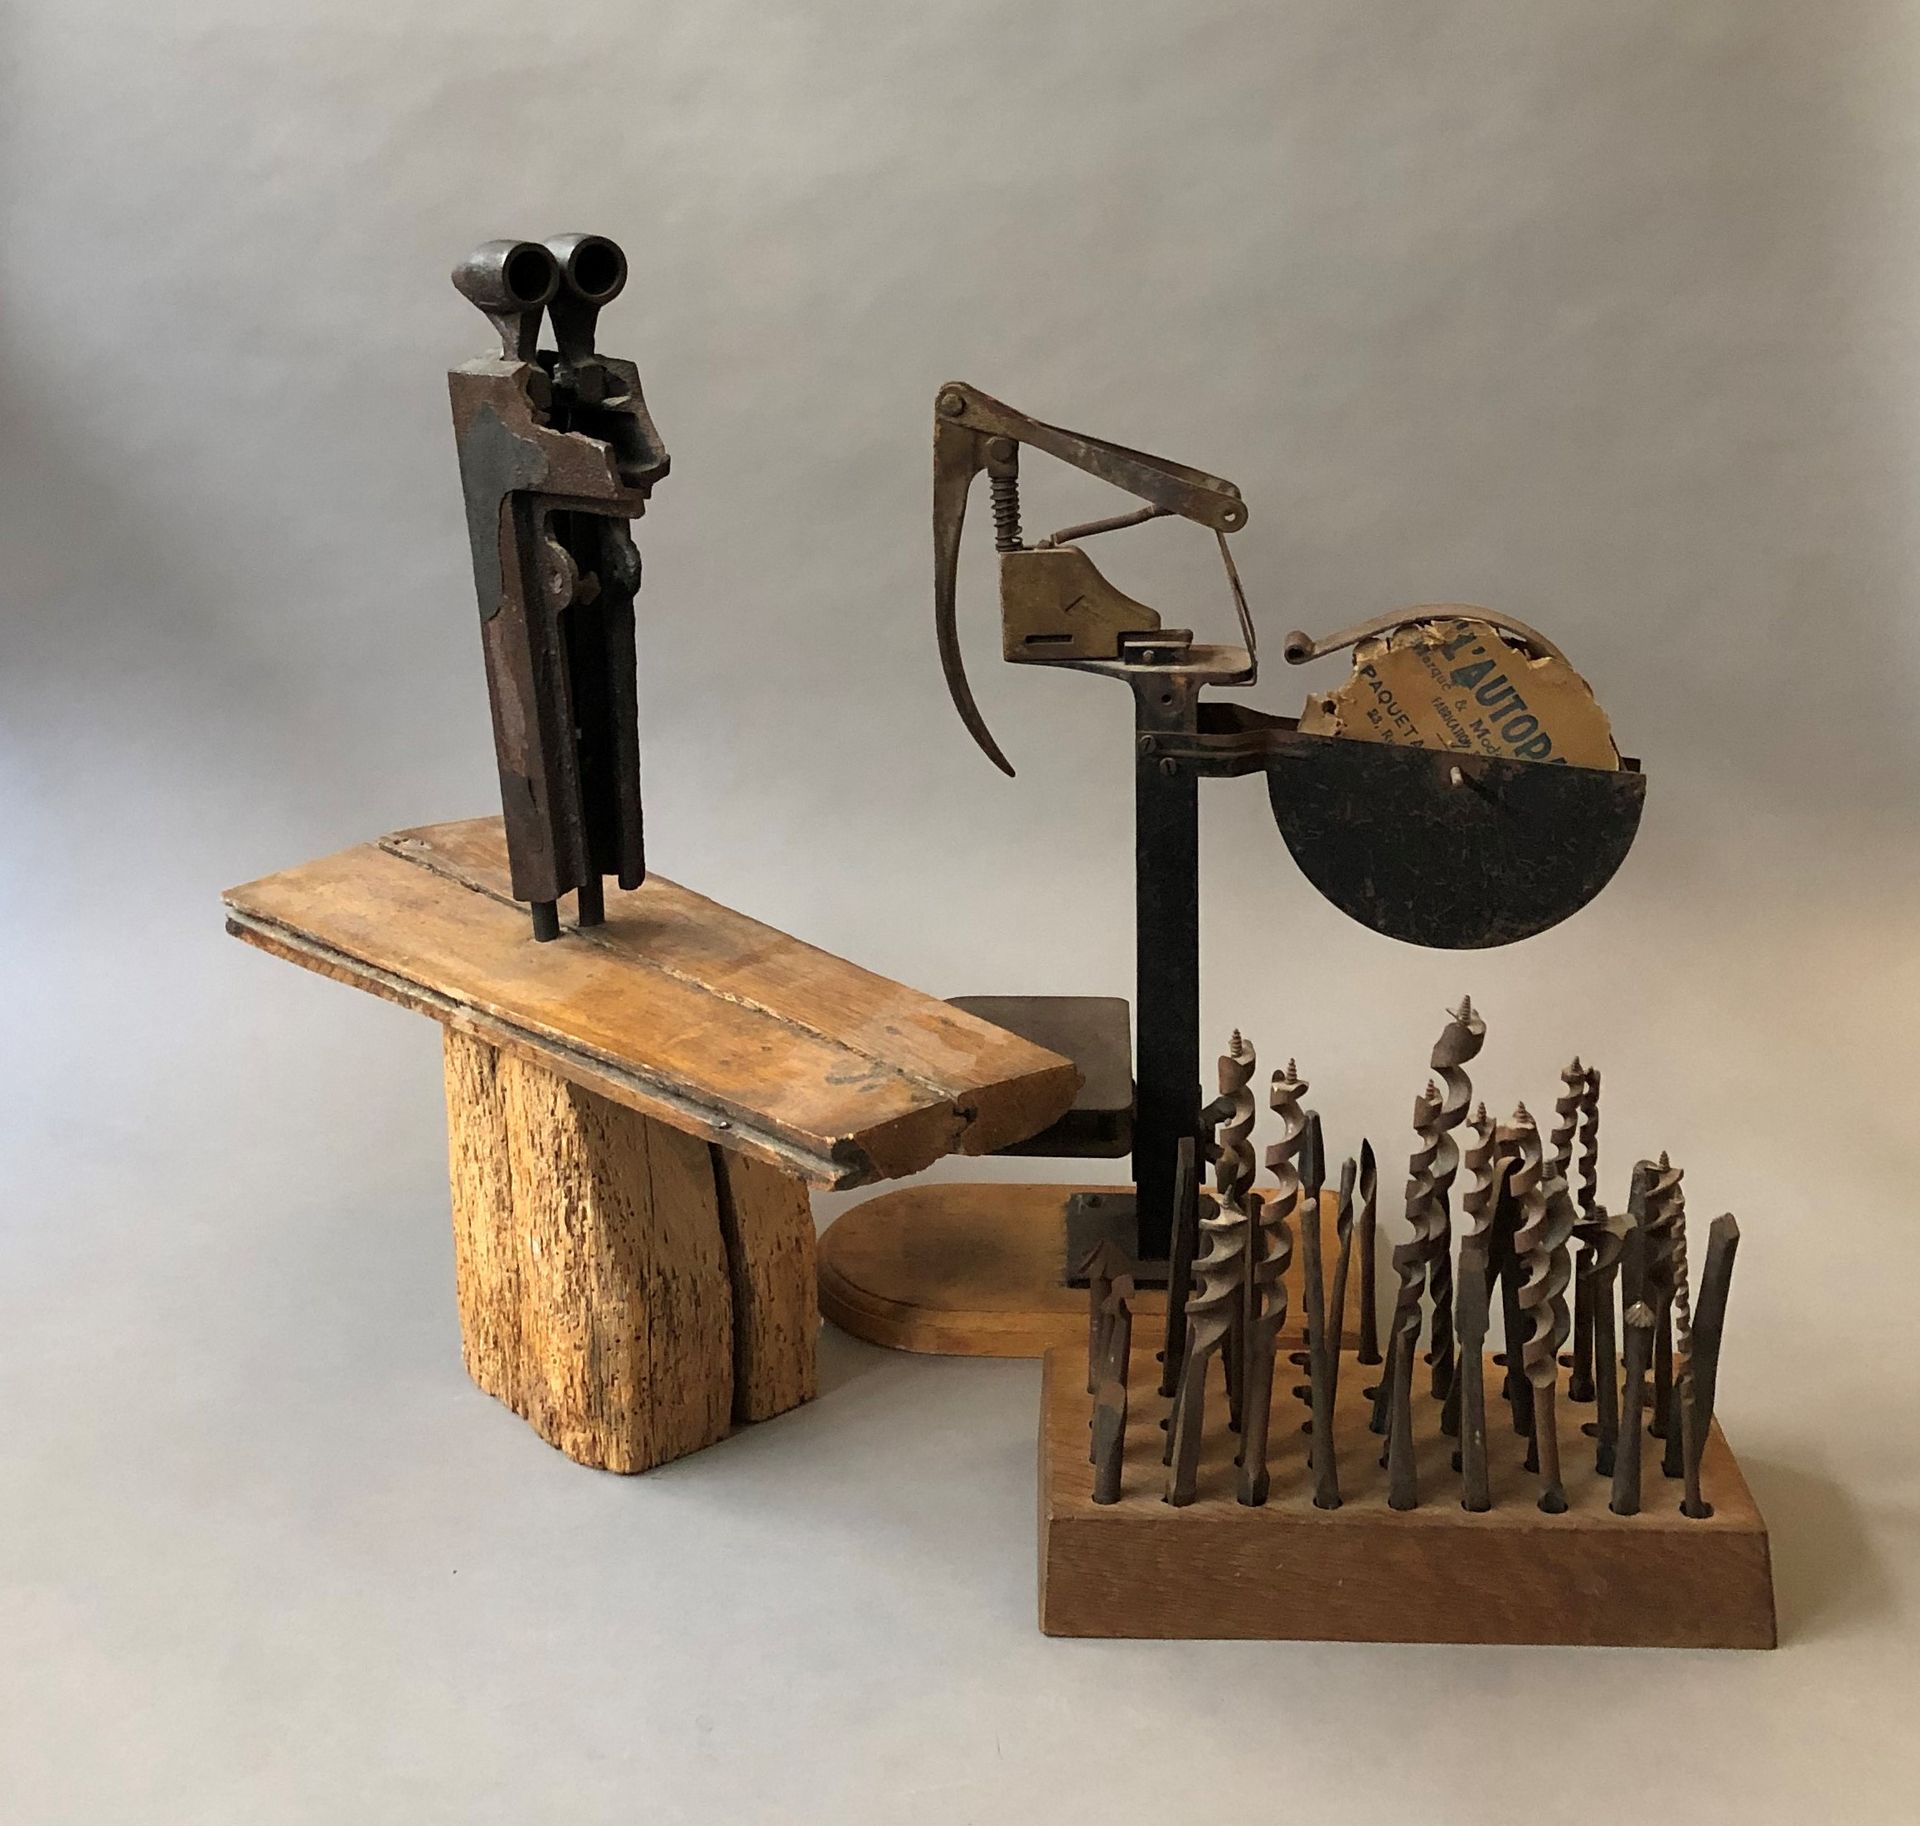 Null Jacques LIMOUSIN (20. Jahrhundert)

Unbenannt

Skulptur aus Metall und Holz&hellip;